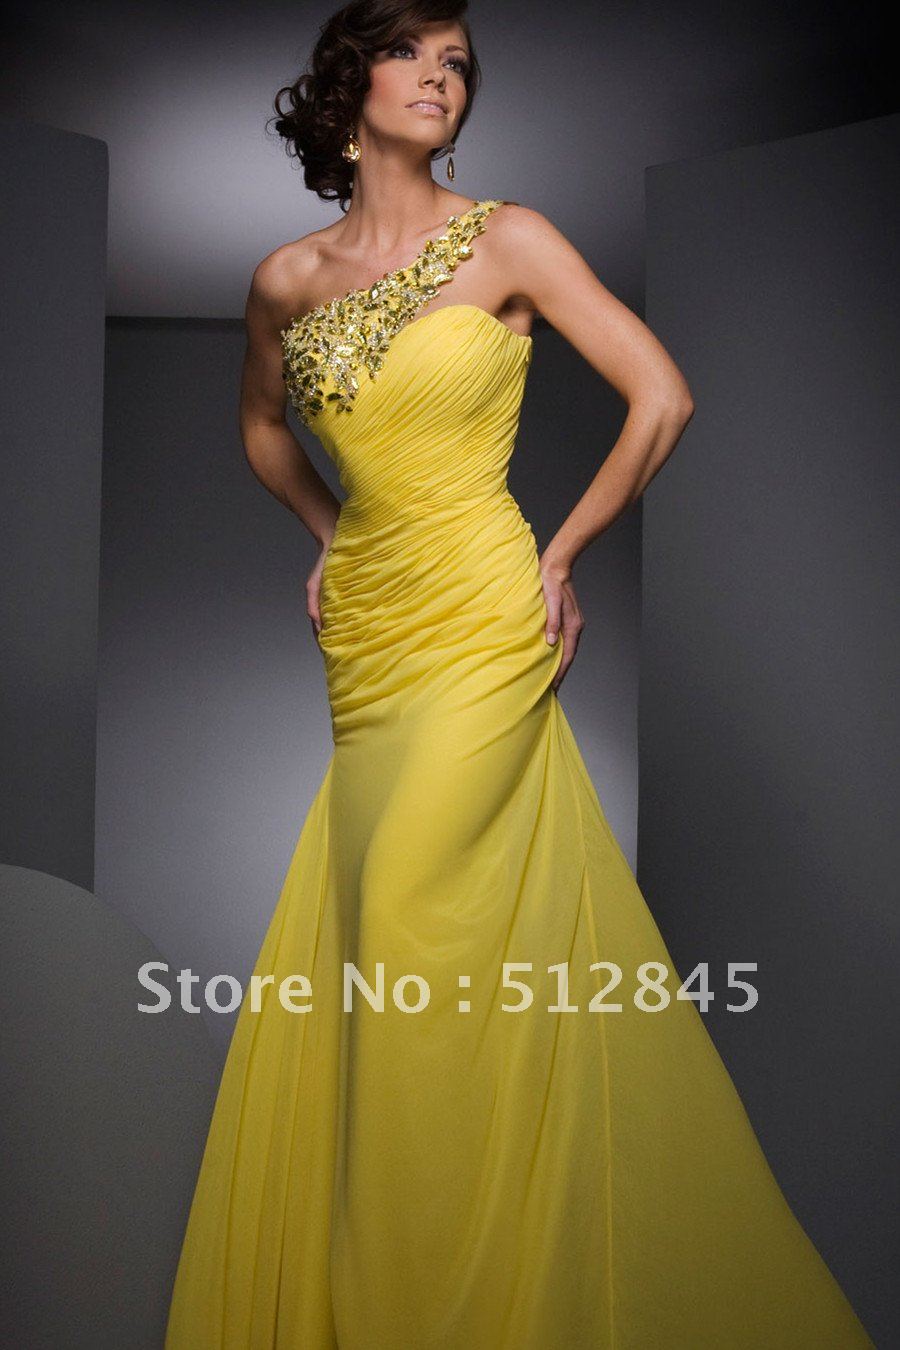 yellow dress for wedding